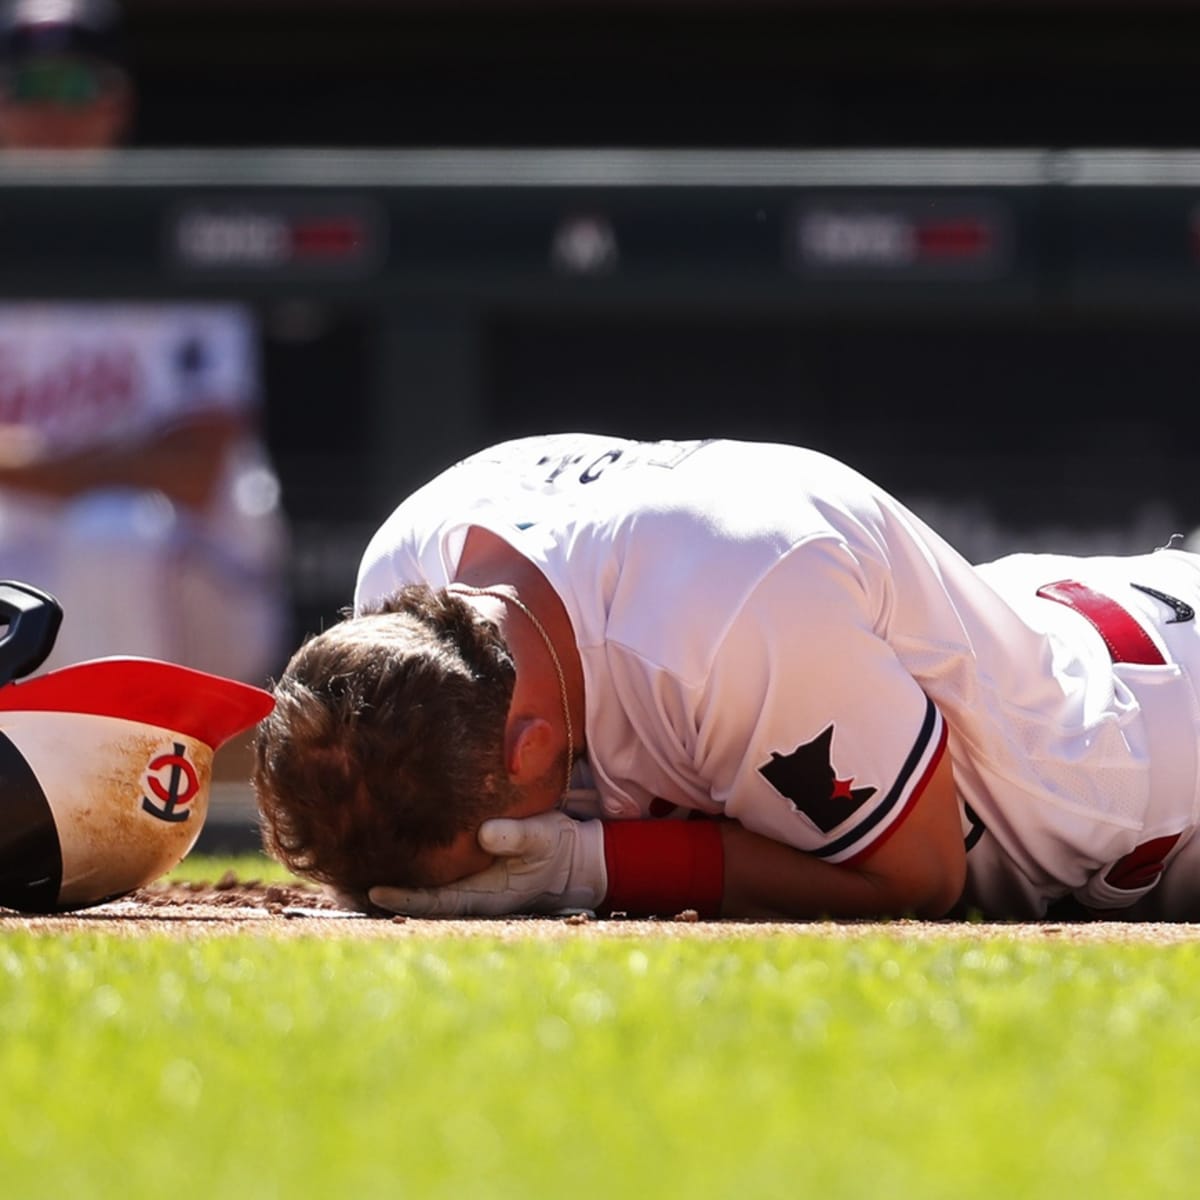 Kyle Farmer injury: How is the Minnesota Twins infielder doing?